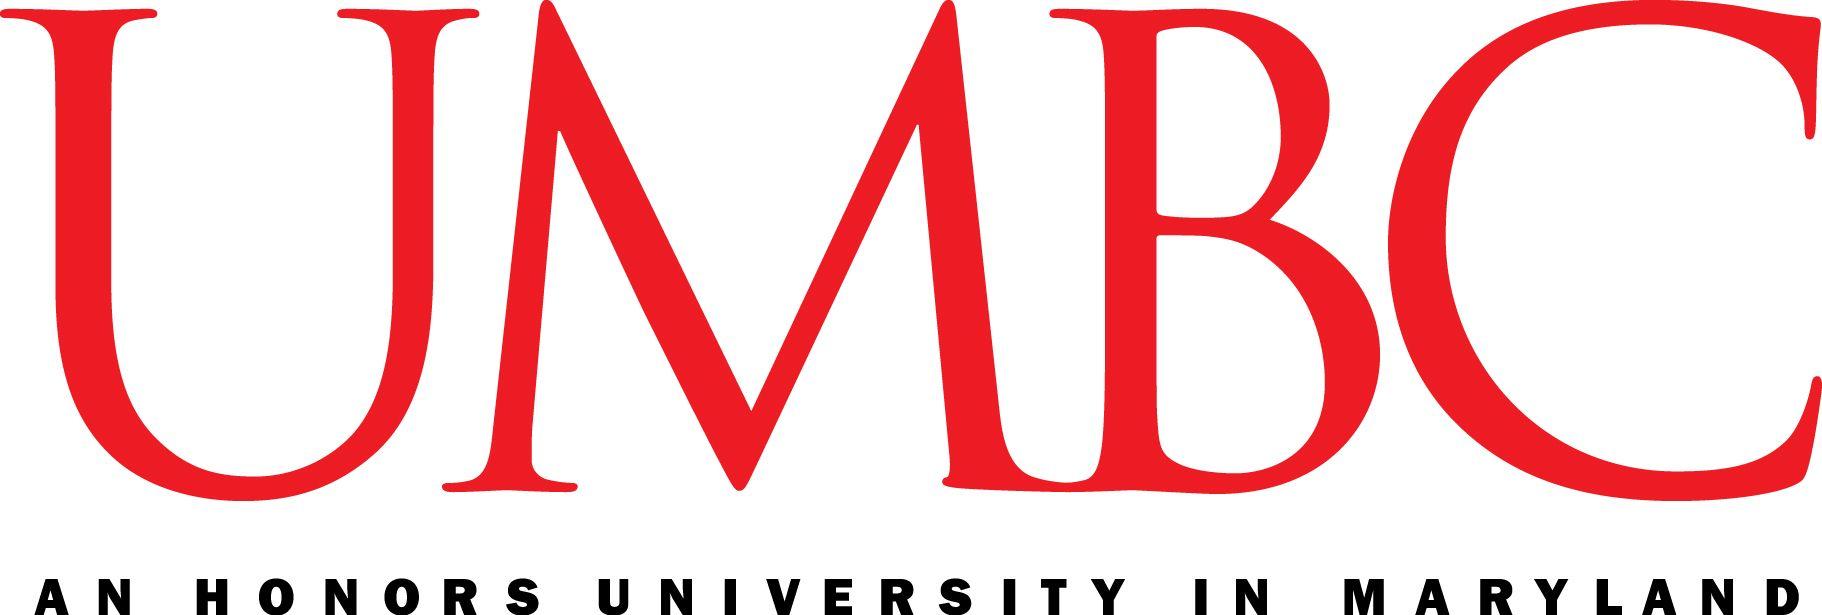 UMBC Logo - UMBC: An Honors University In Maryland